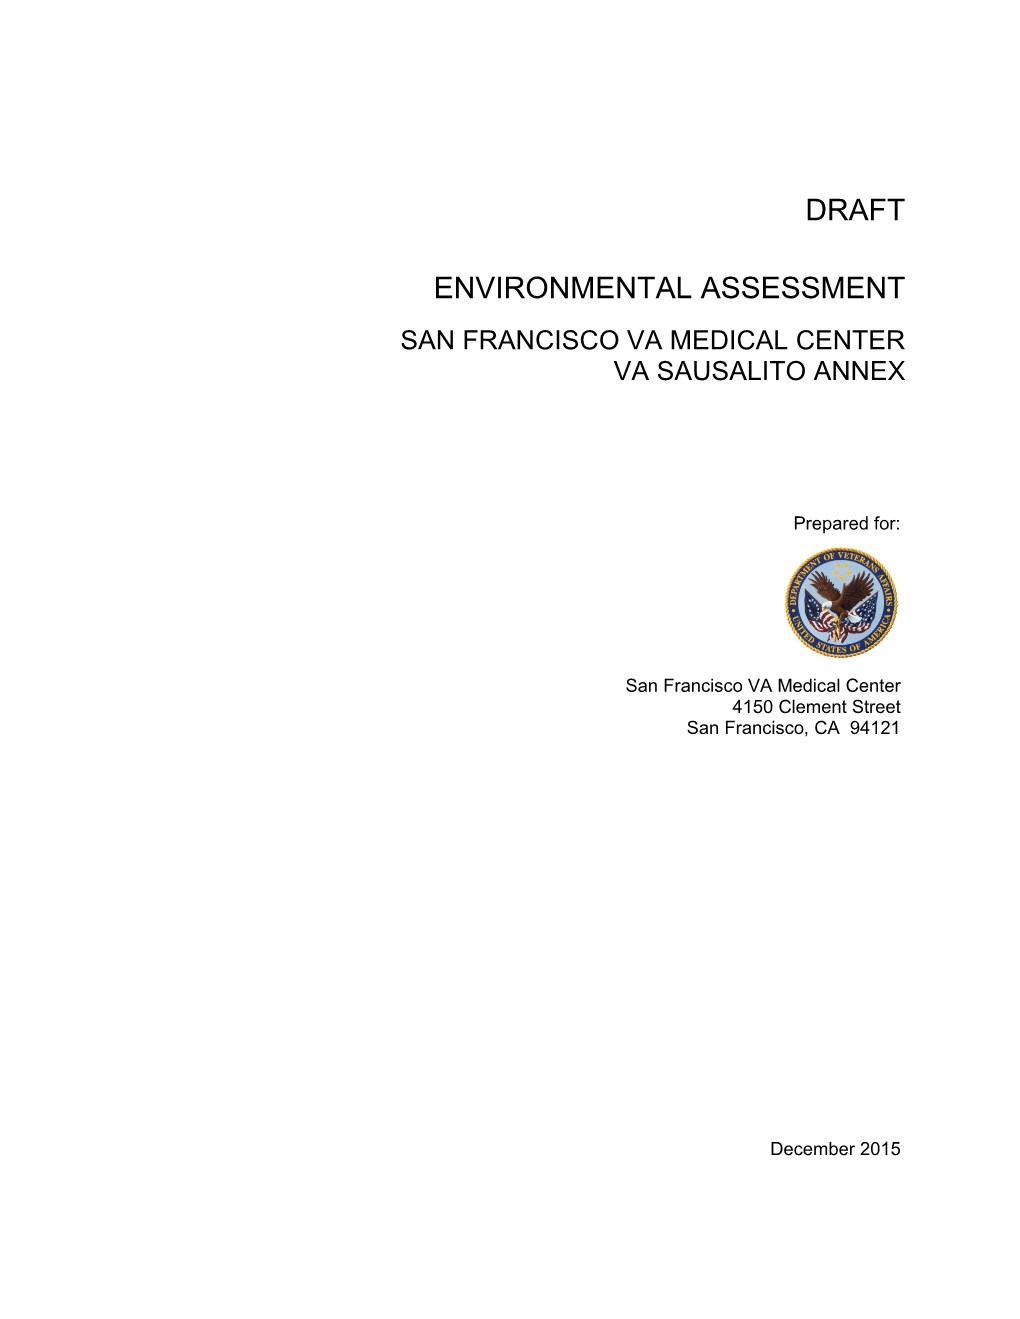 Draft Environmental Assessment for the Sausalito Annex